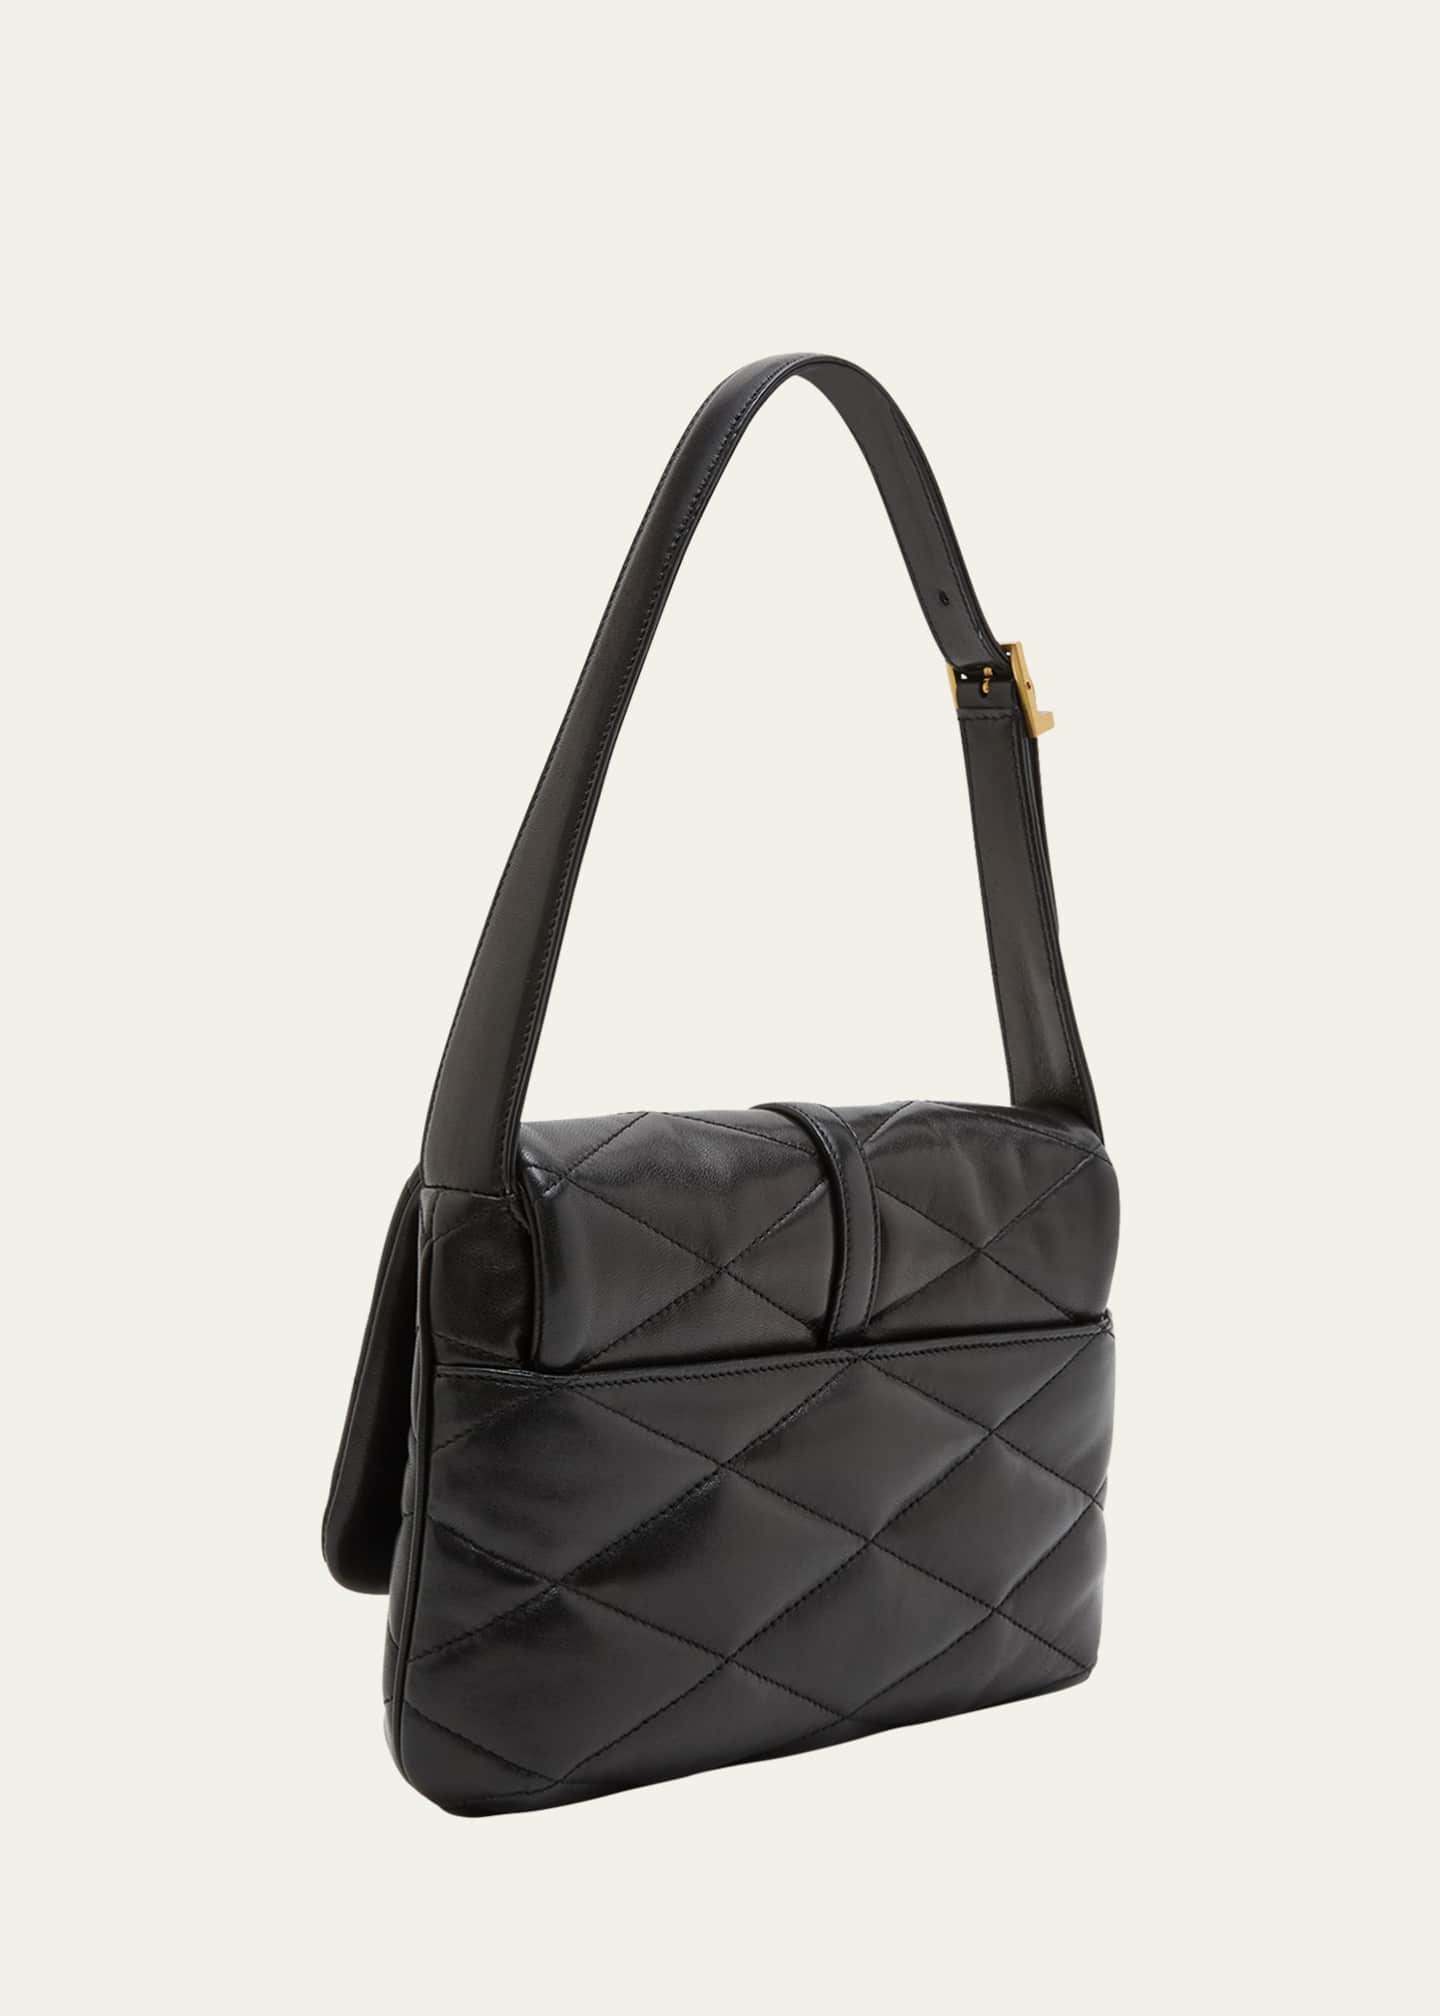 Saint Laurent Midnight Patent-leather Clutch Bag In Nero